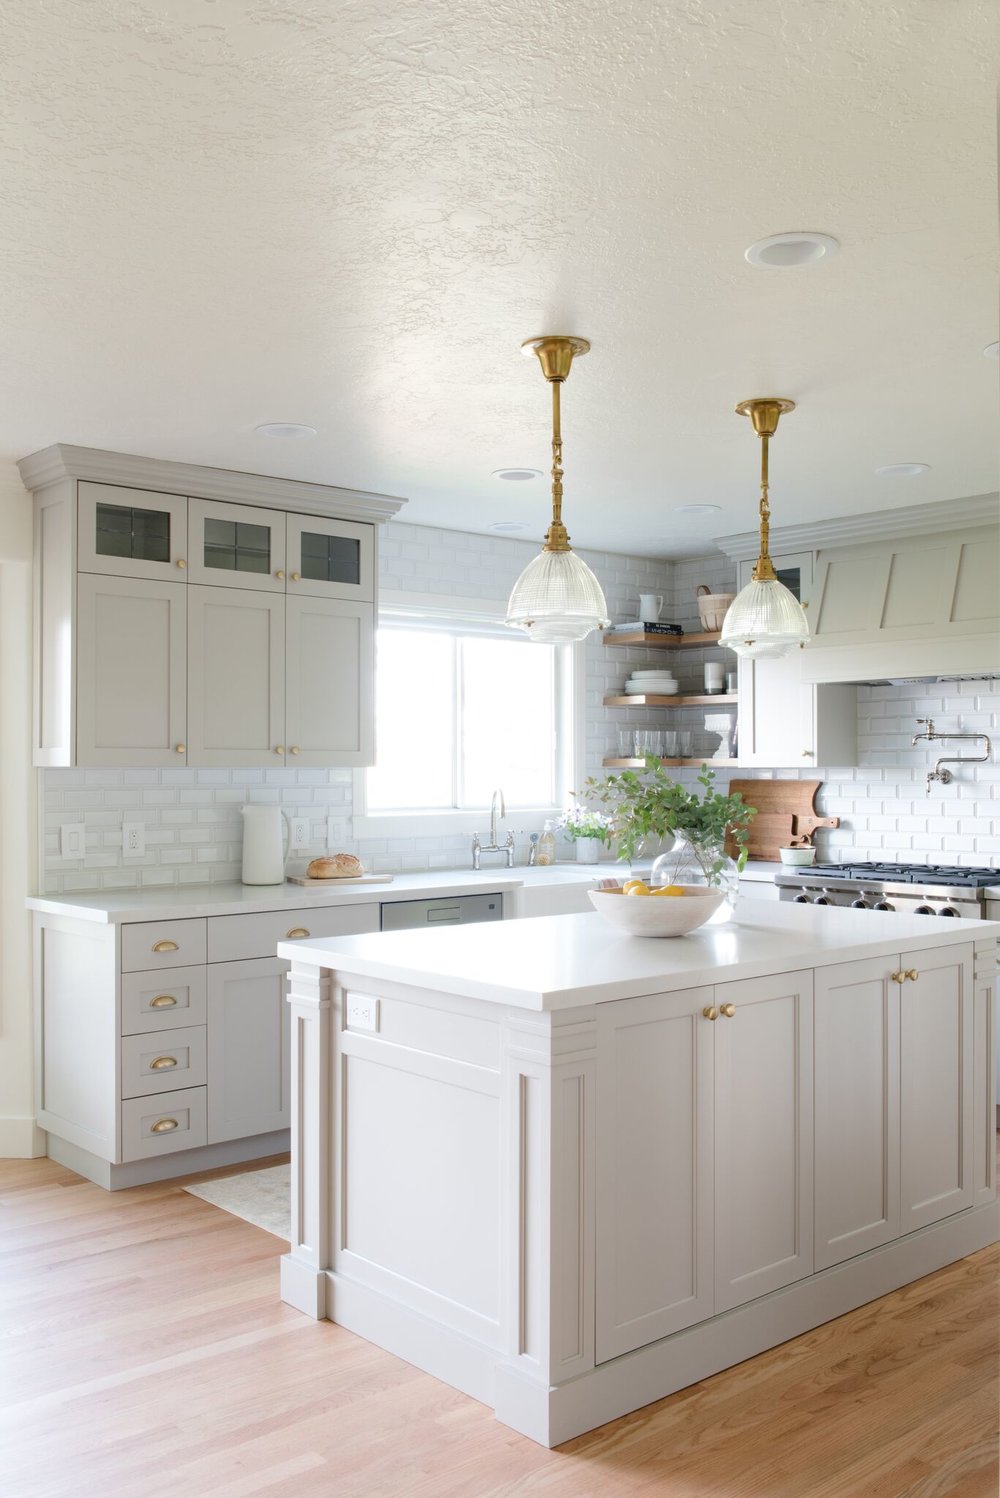 light grey kitchen cabinets with gold hardware, white quartz countertops, white subway tile backsplash